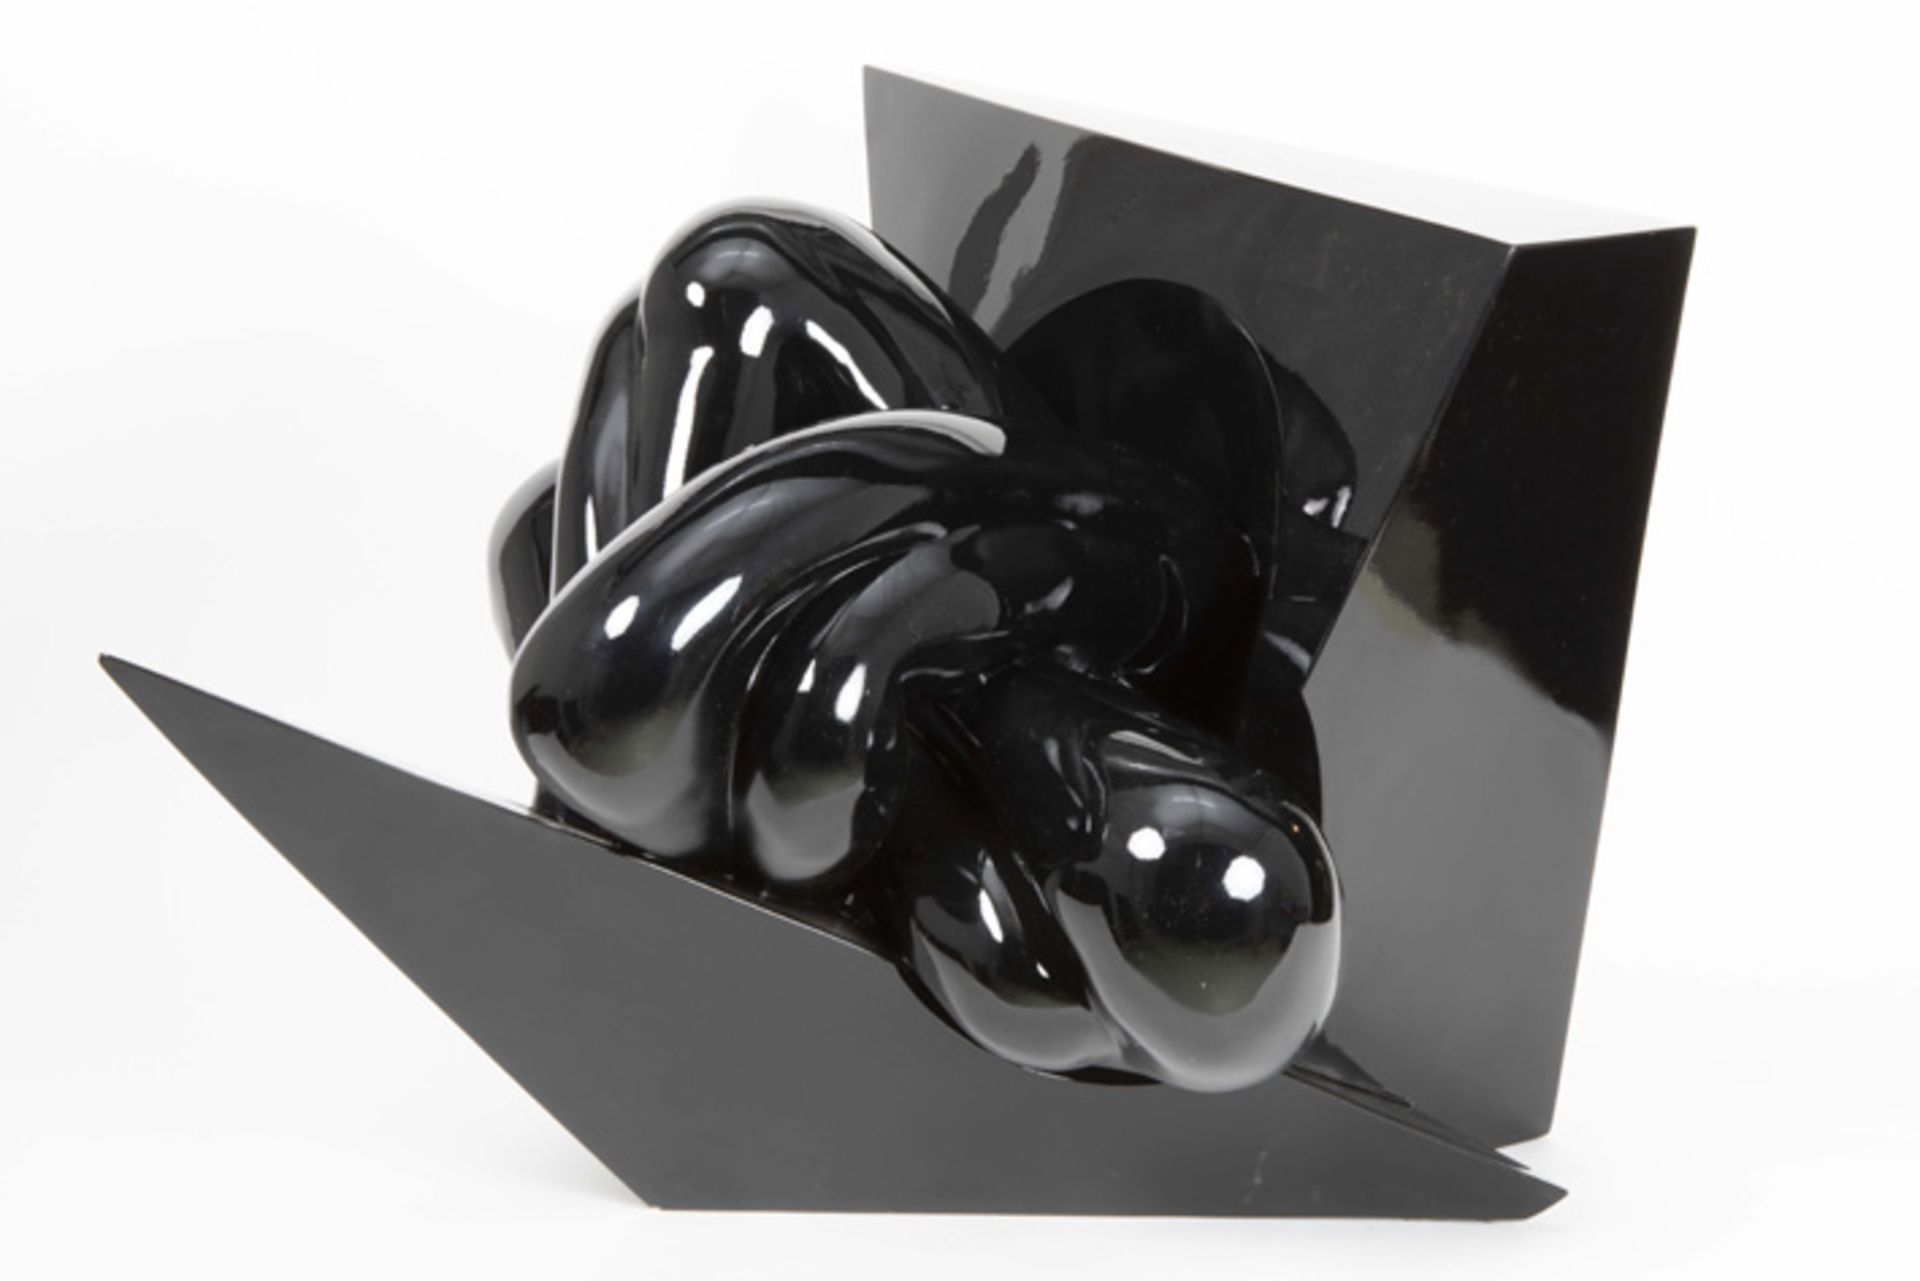 RAVASIO PAOLA (° 1978) unieke sculptuur in zwart 'vetroresina' (hars van glas) dd 2010 getiteld "